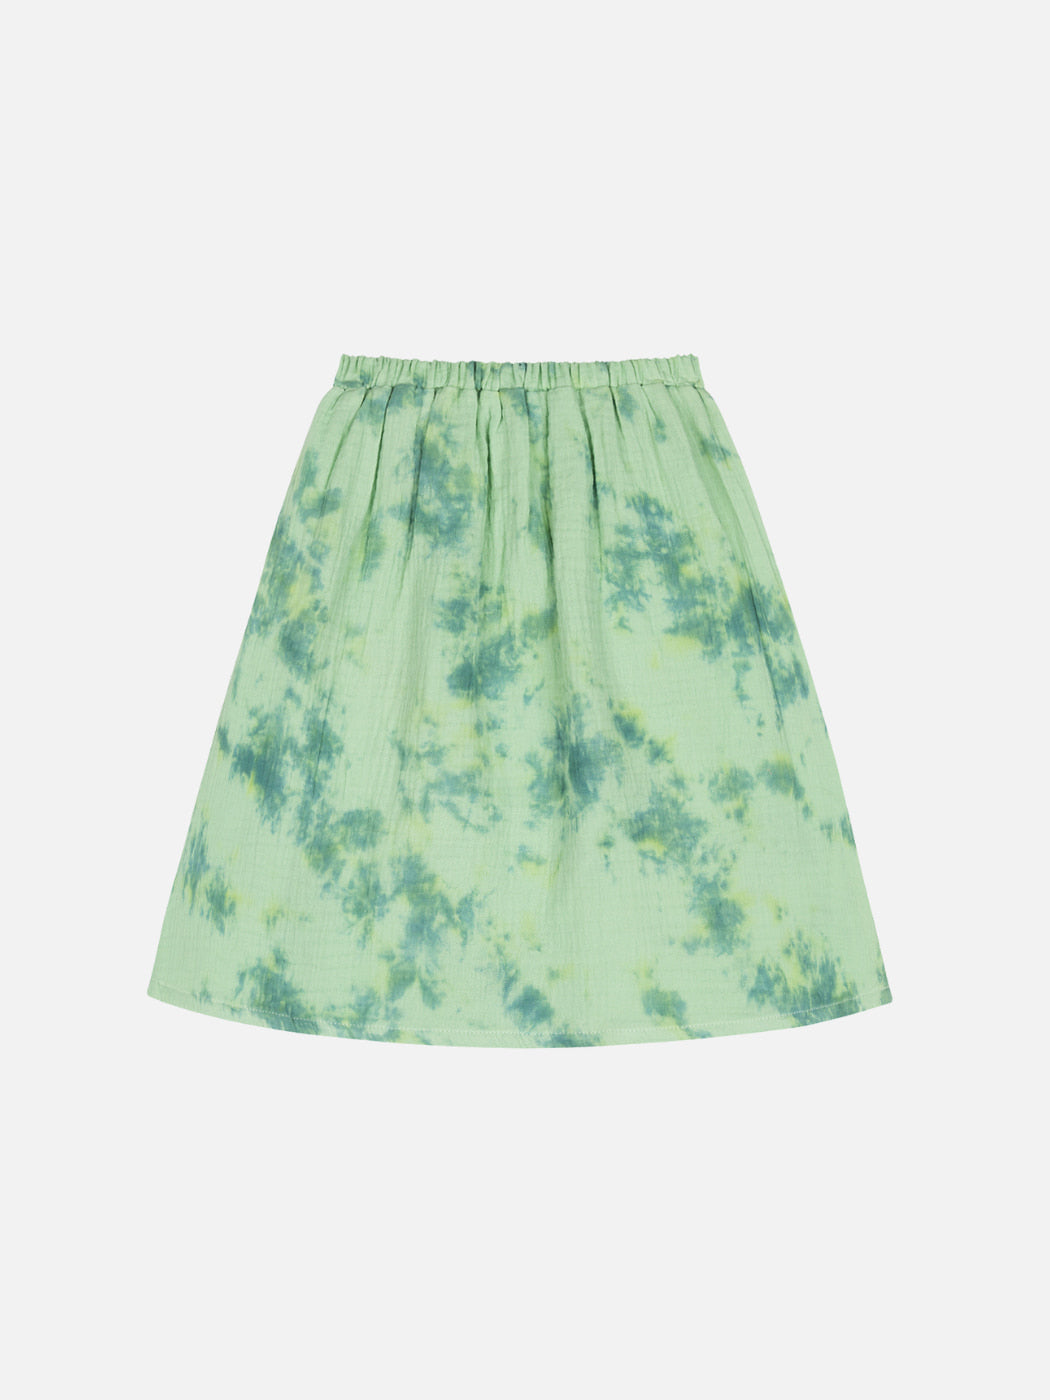 Relaxed Skirt - Green Tie Dye